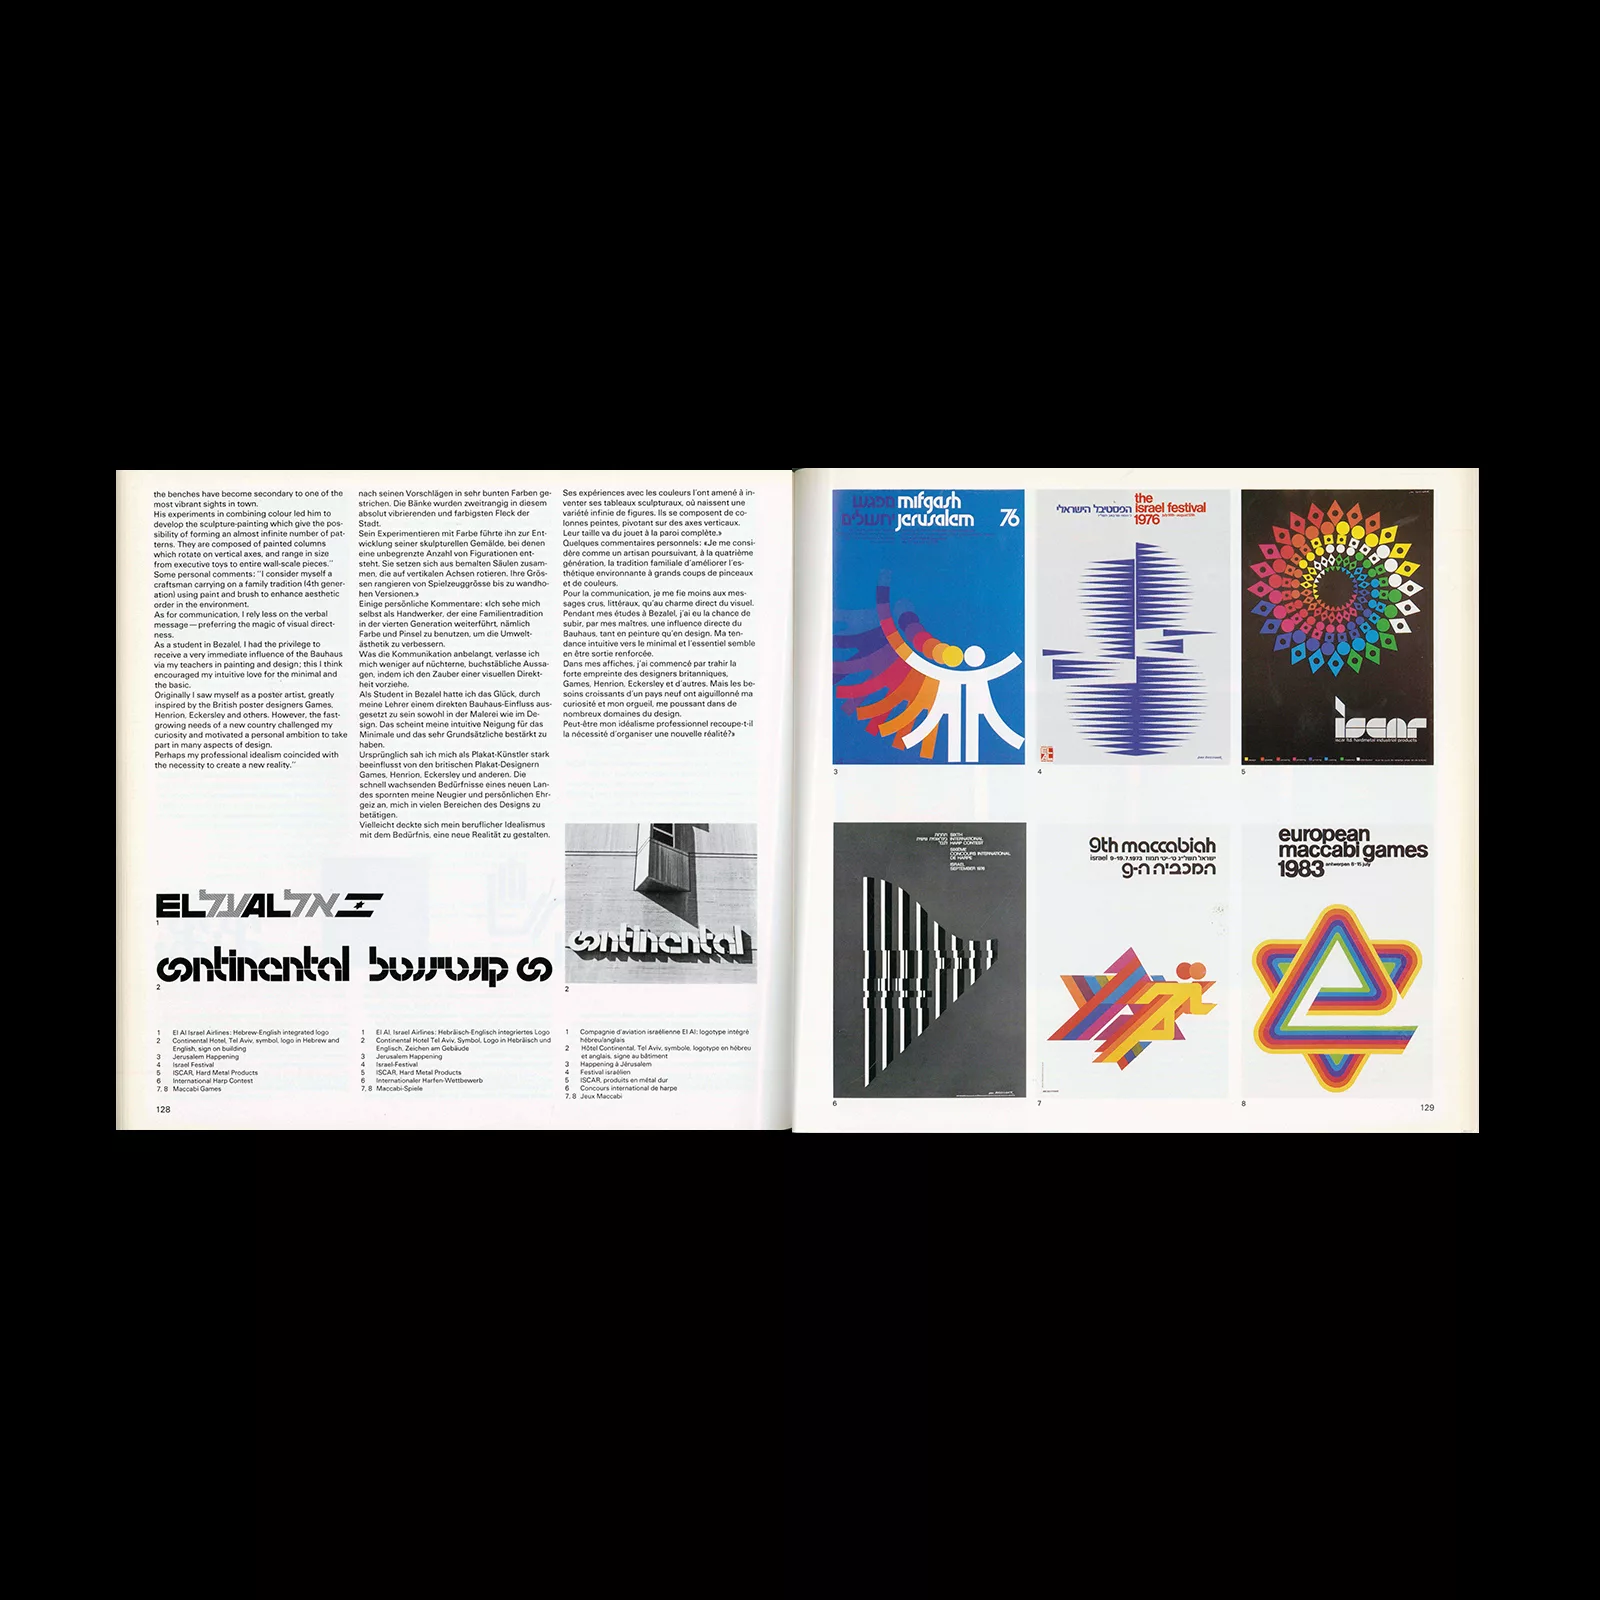 Top Graphic Design, ABC Edition, 1983